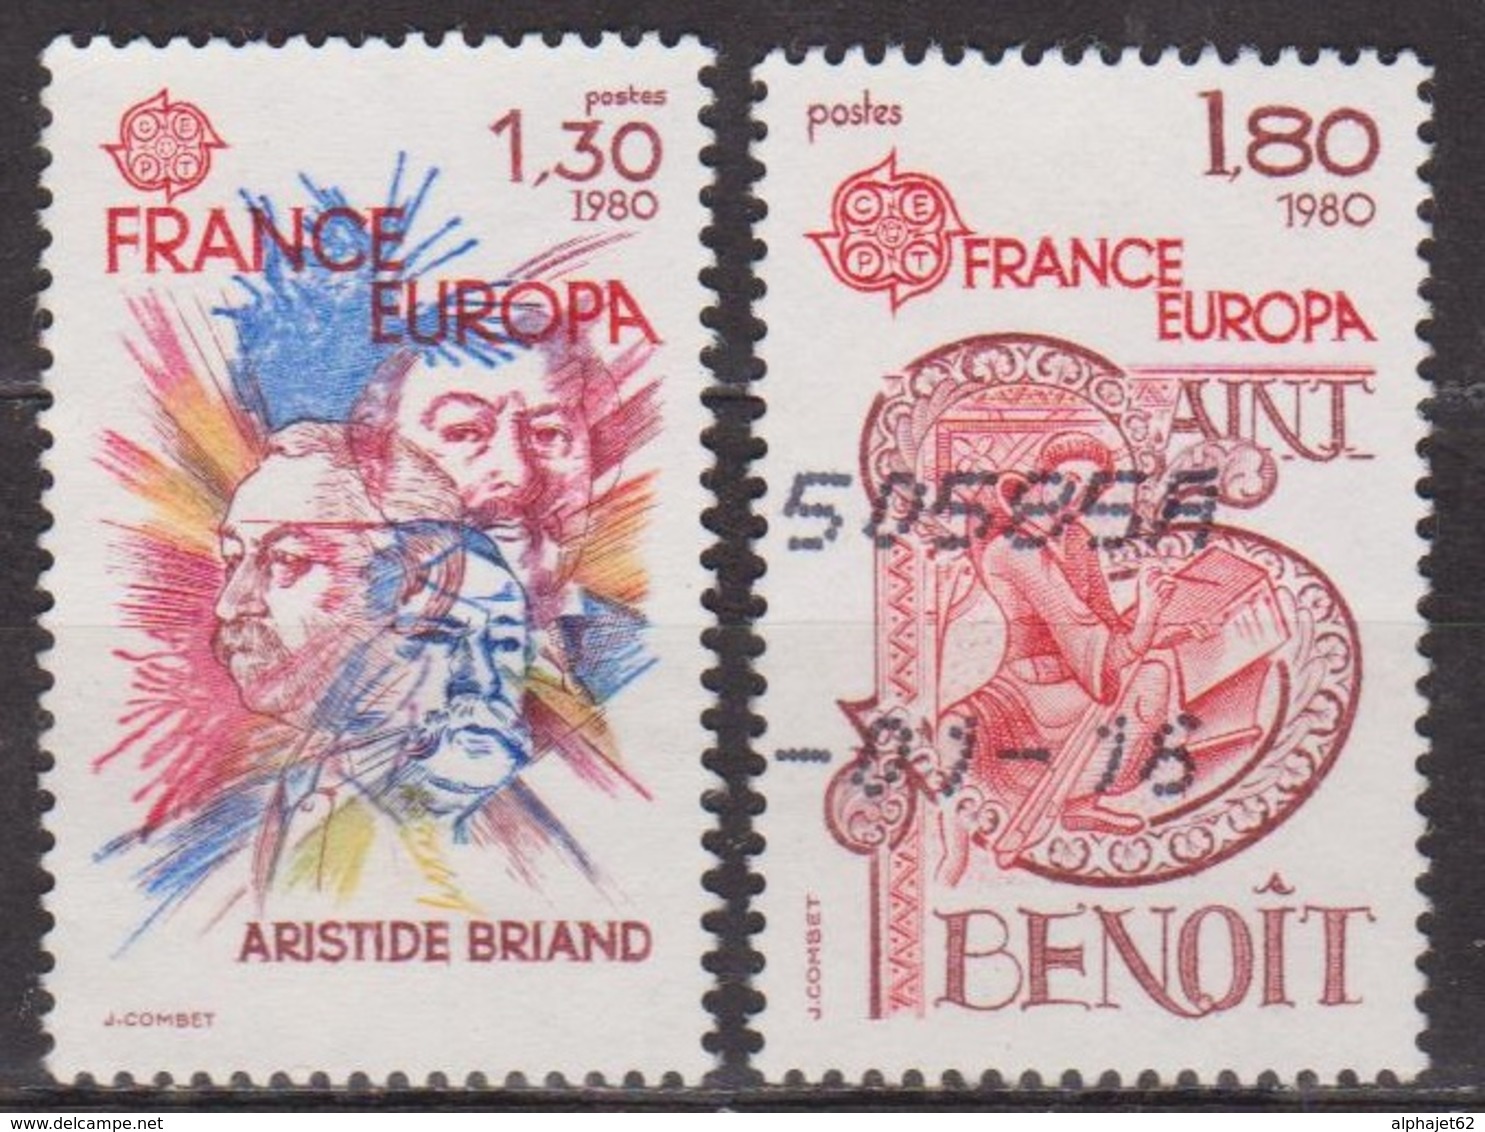 Europa - FRANCE - Aristide Briand, Saint Benoit - N° 2085-2086 - 1980 - Gebraucht